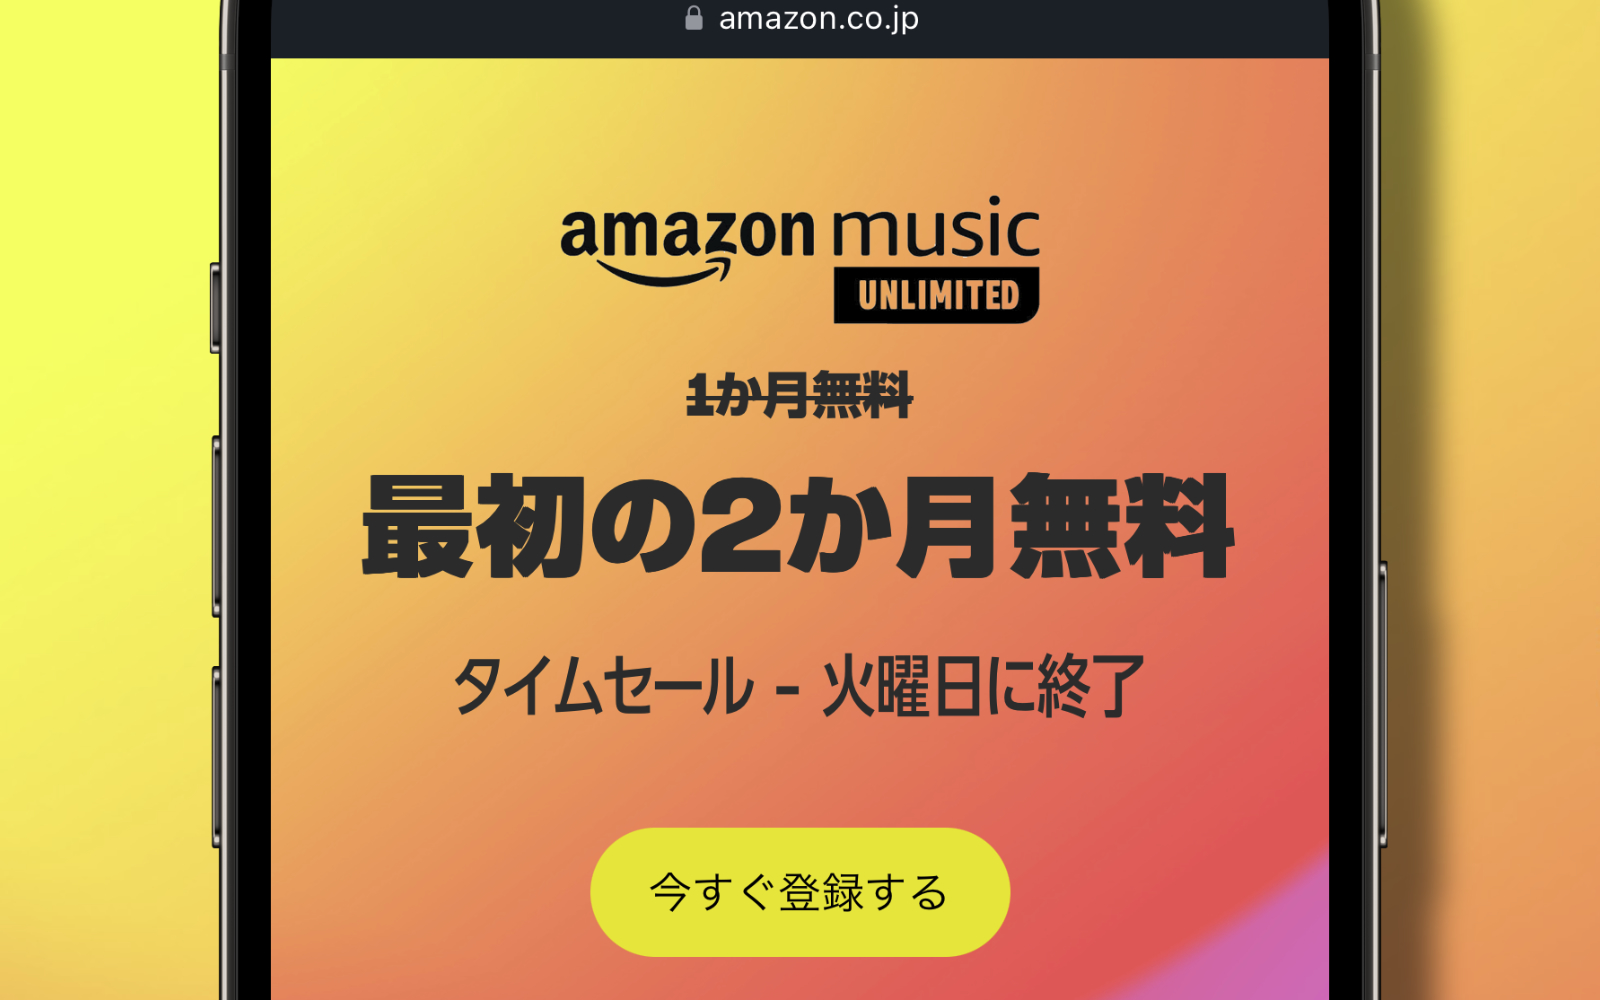 Amazon Music Unlimited campaign